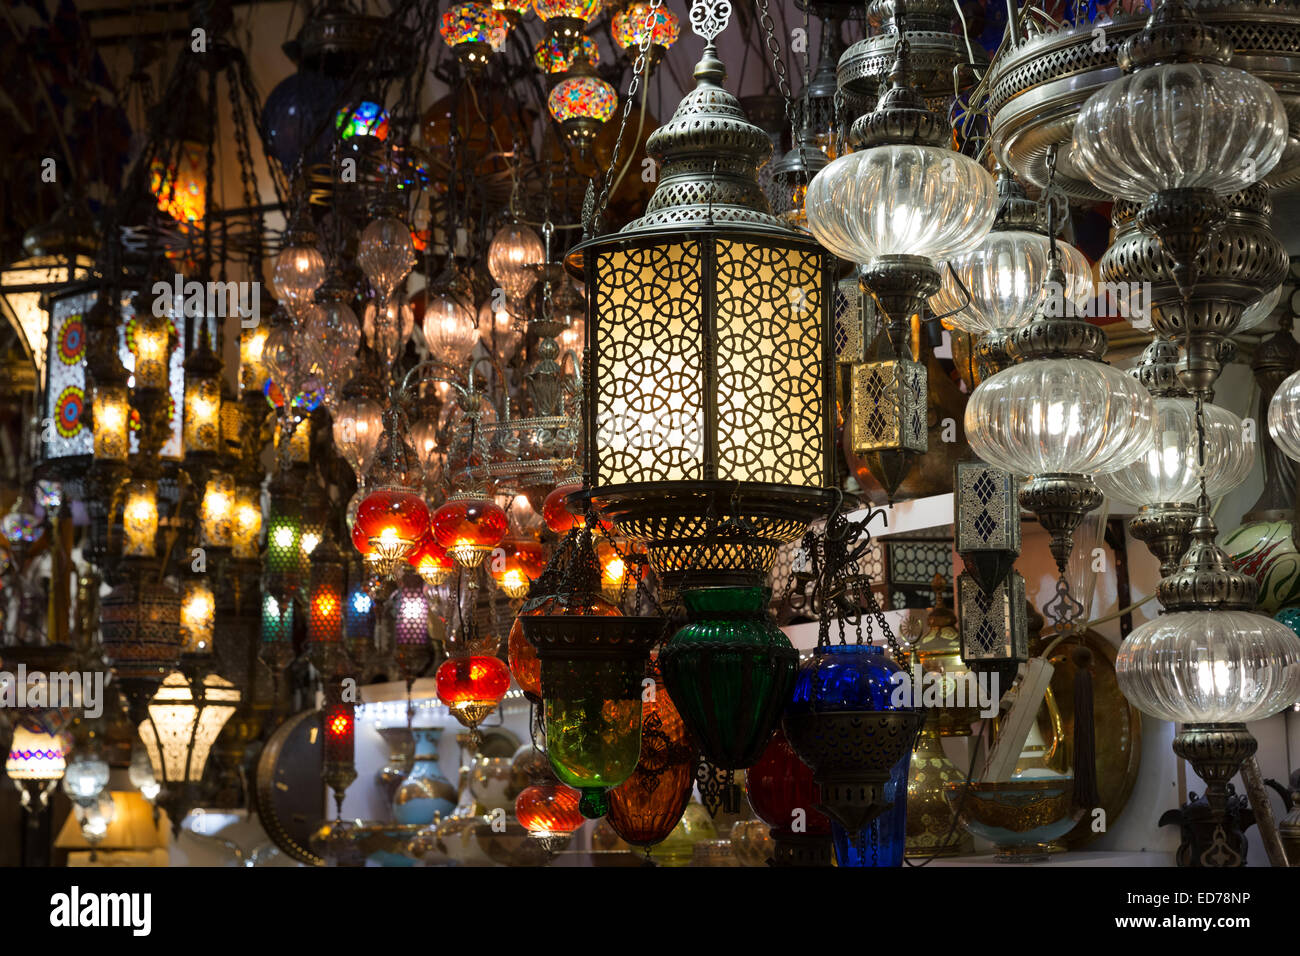 Traditional Turkish ornate lanterns  lamps in The Grand Bazaar, Kapalicarsi, great market in Beyazi, Istanbul, Turkey Stock Photo